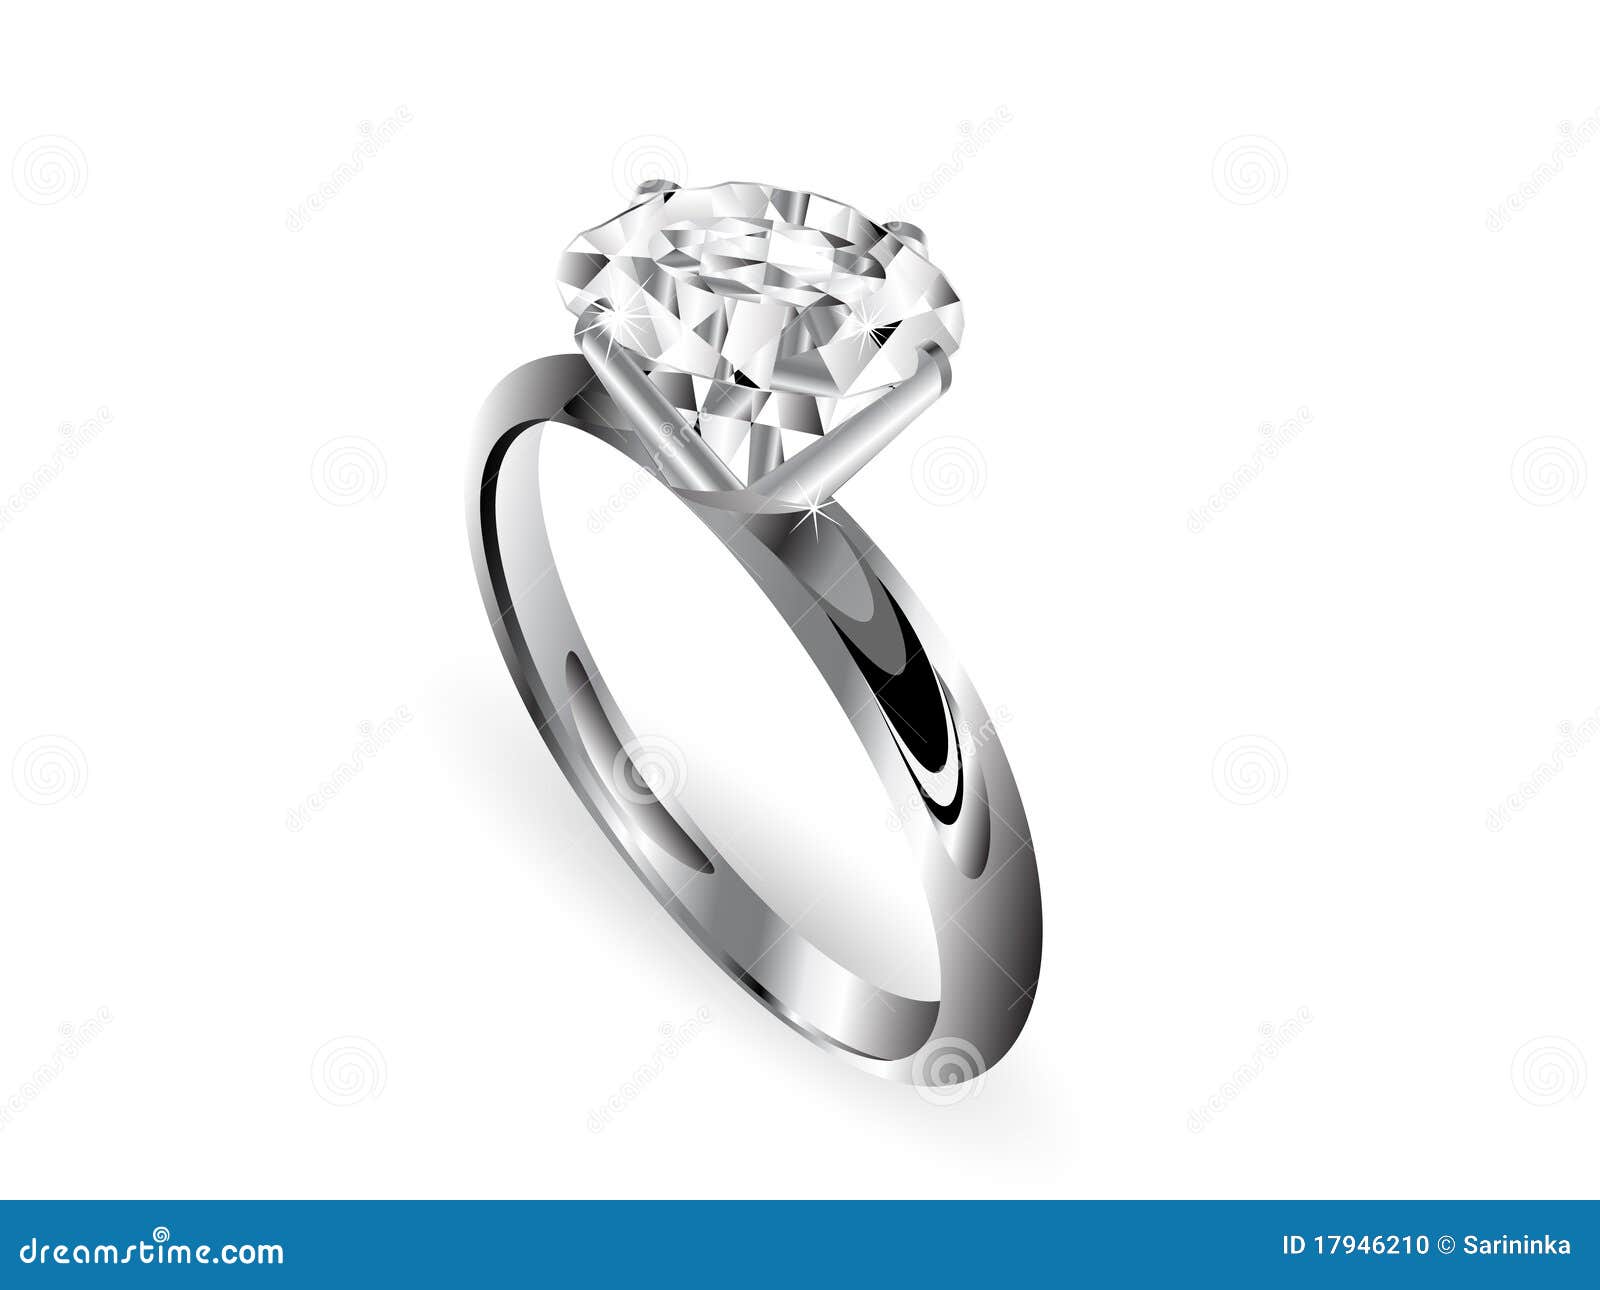 Diamond ring stock vector. Illustration of glittery, symbol - 17946210